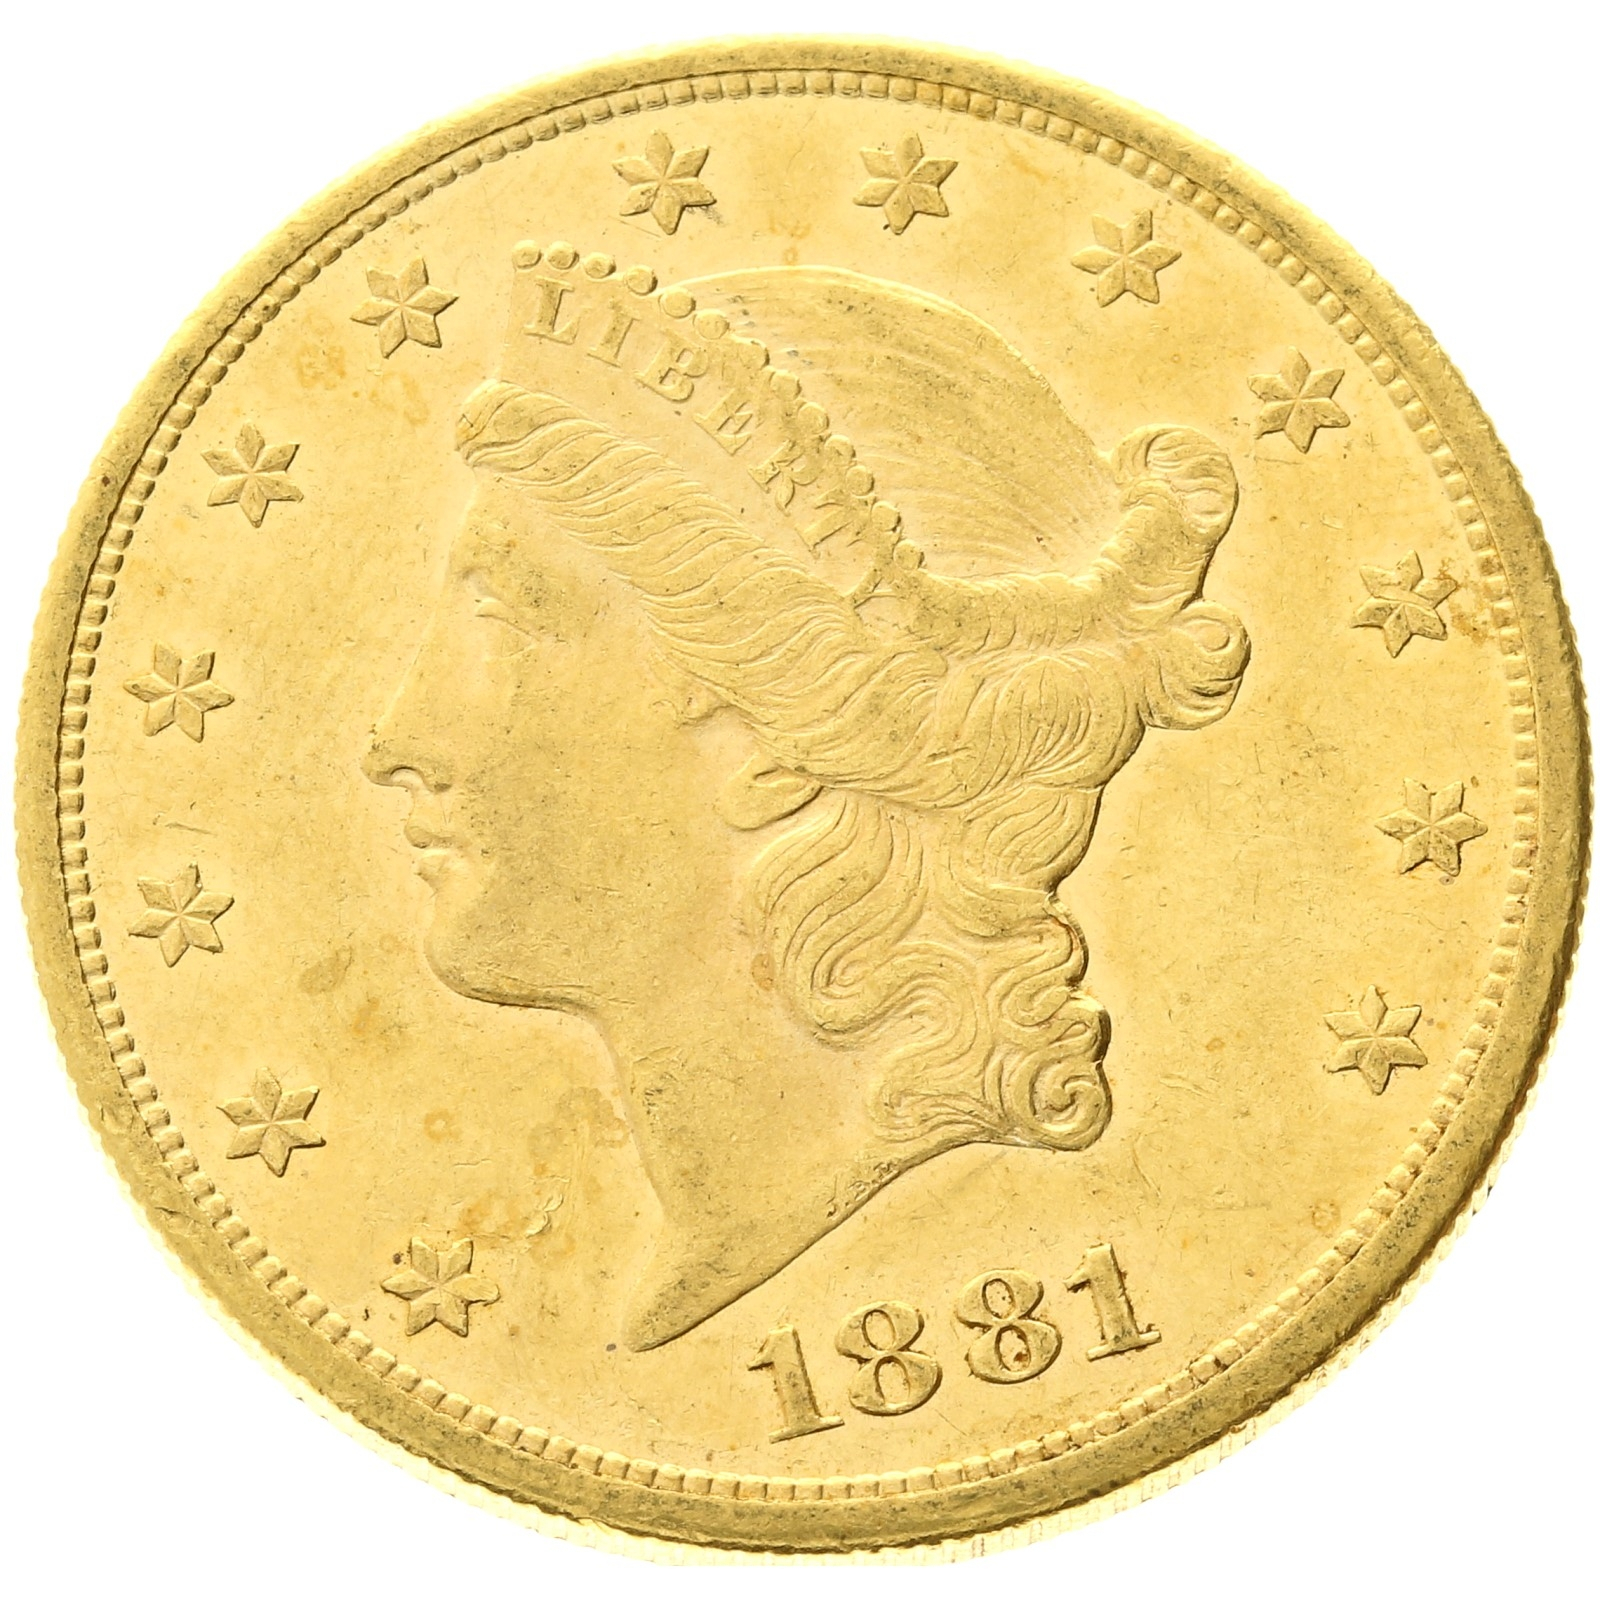 USA - 20 dollars - 1881 - S - Liberty Head 